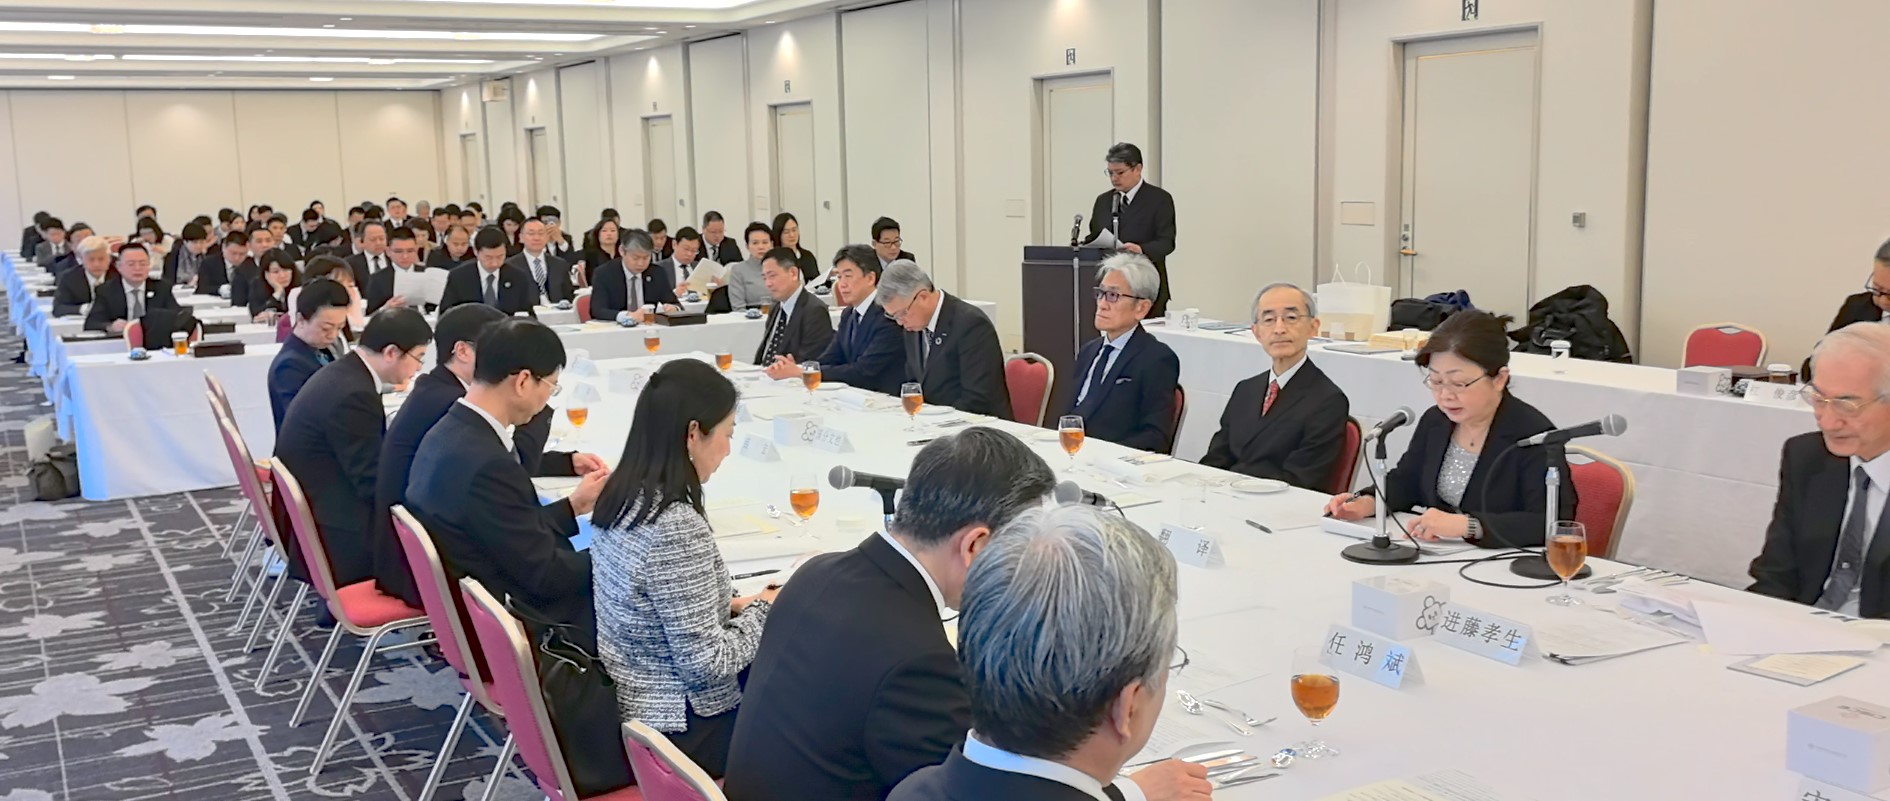 中日経済界対話が日本・東京で開催